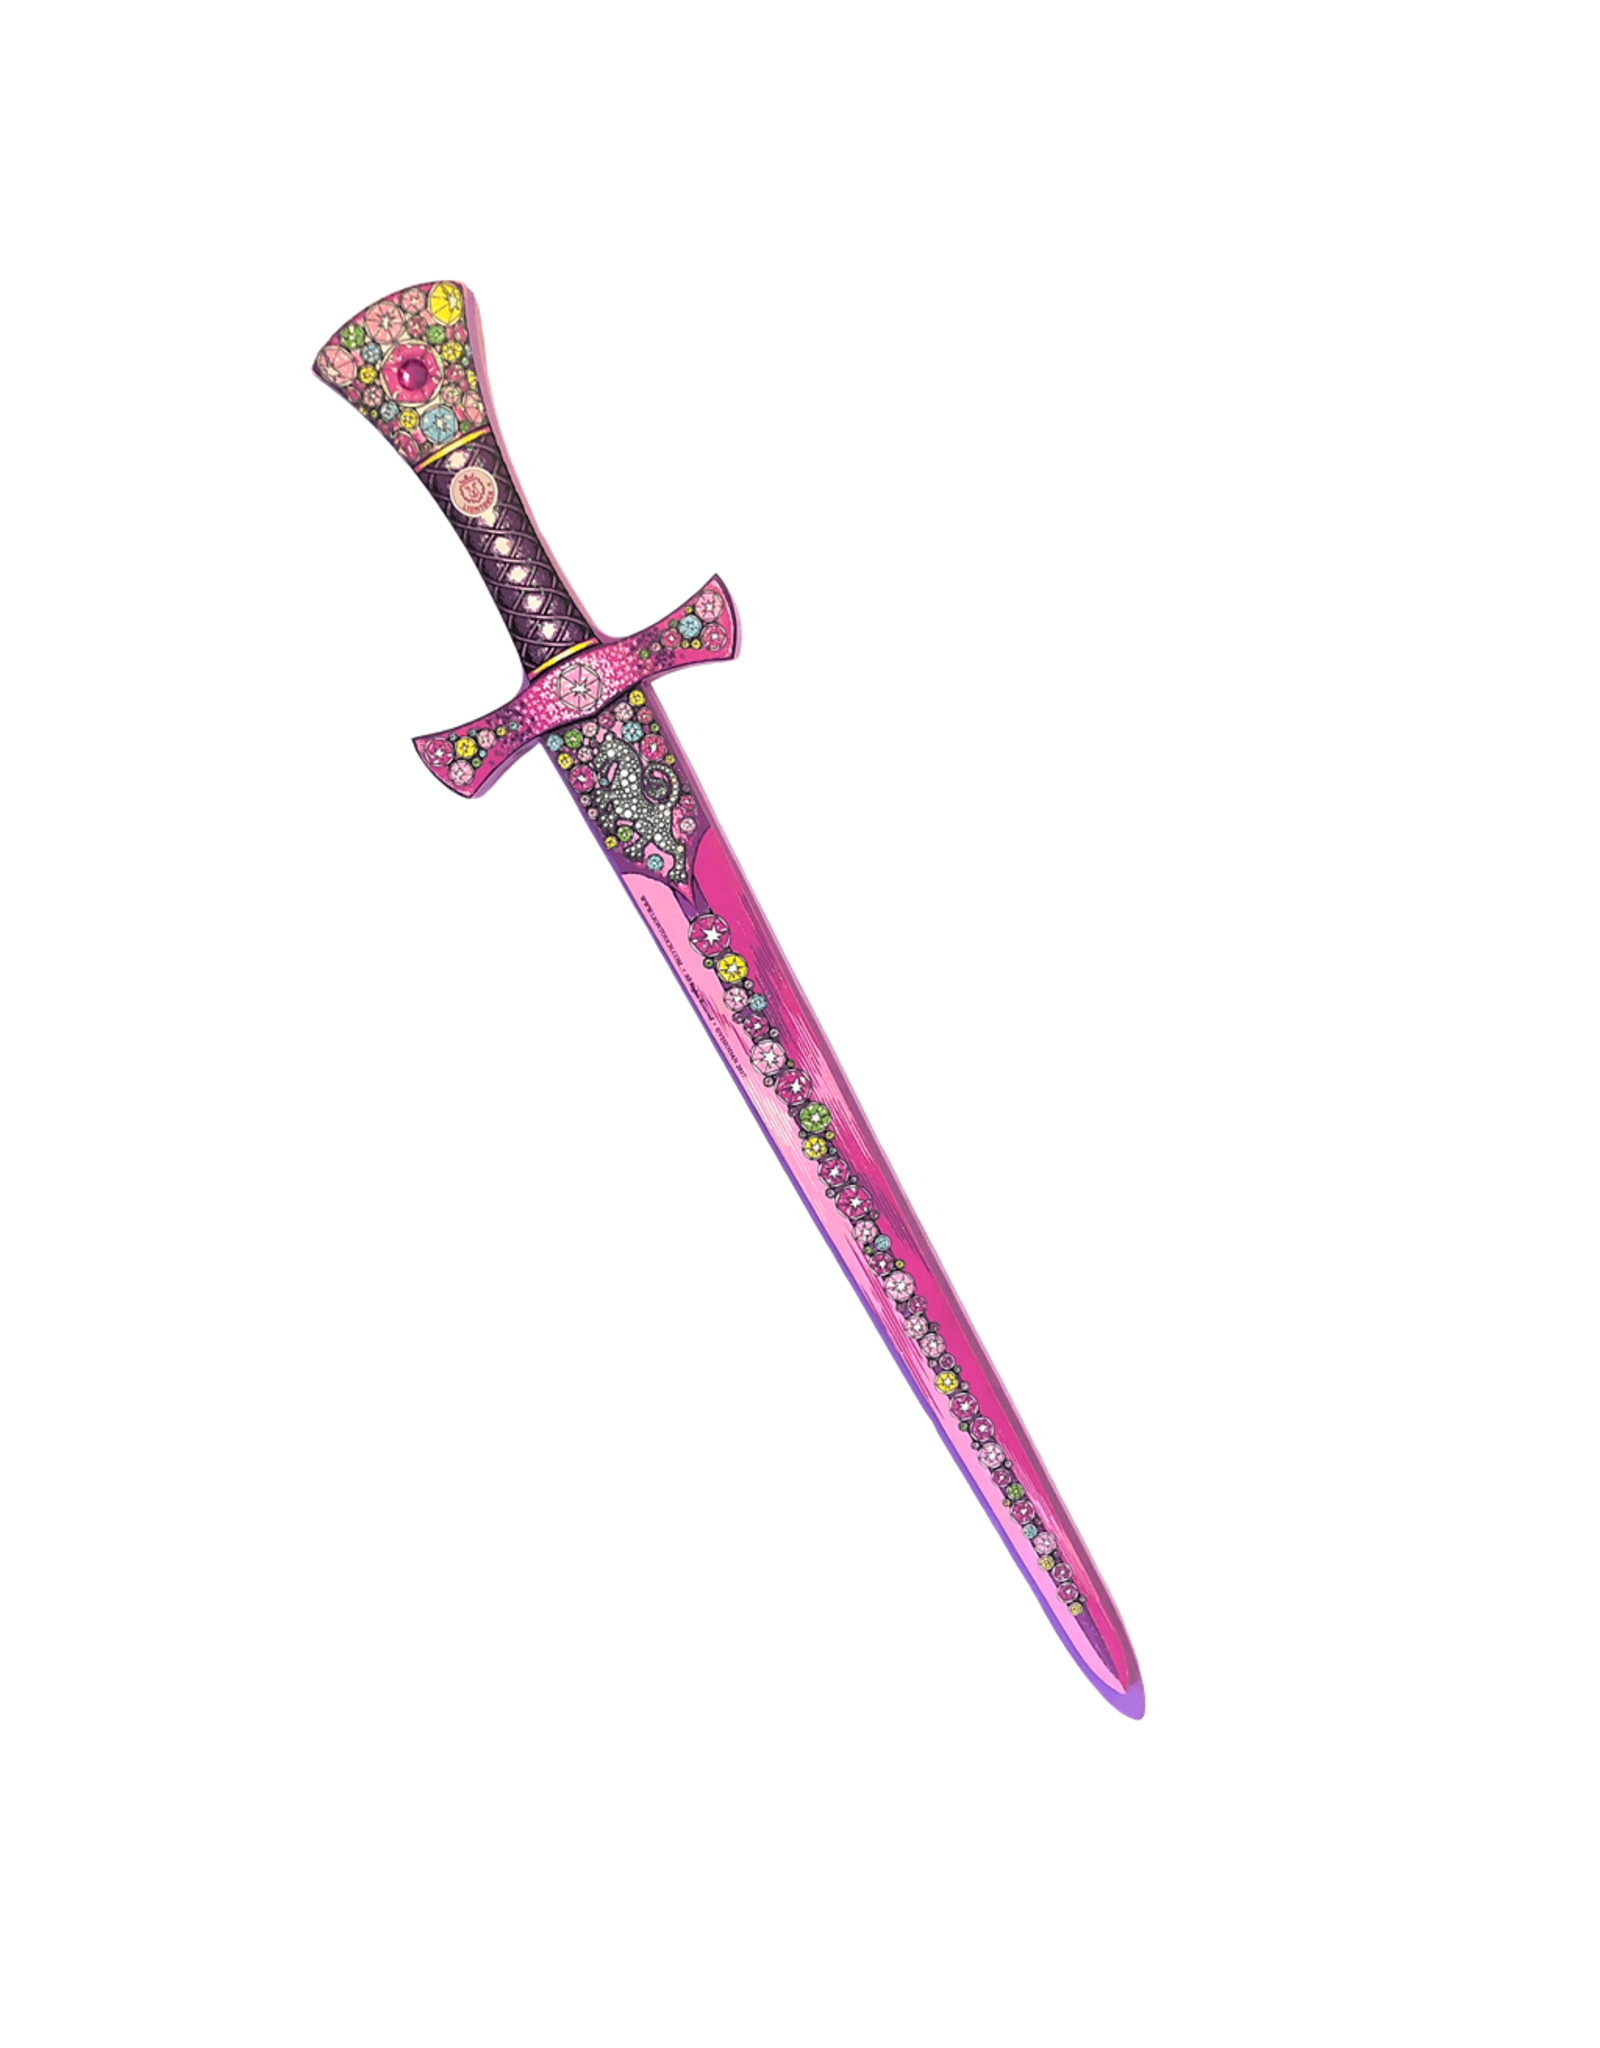 Liontouch Crystal Princess Sword